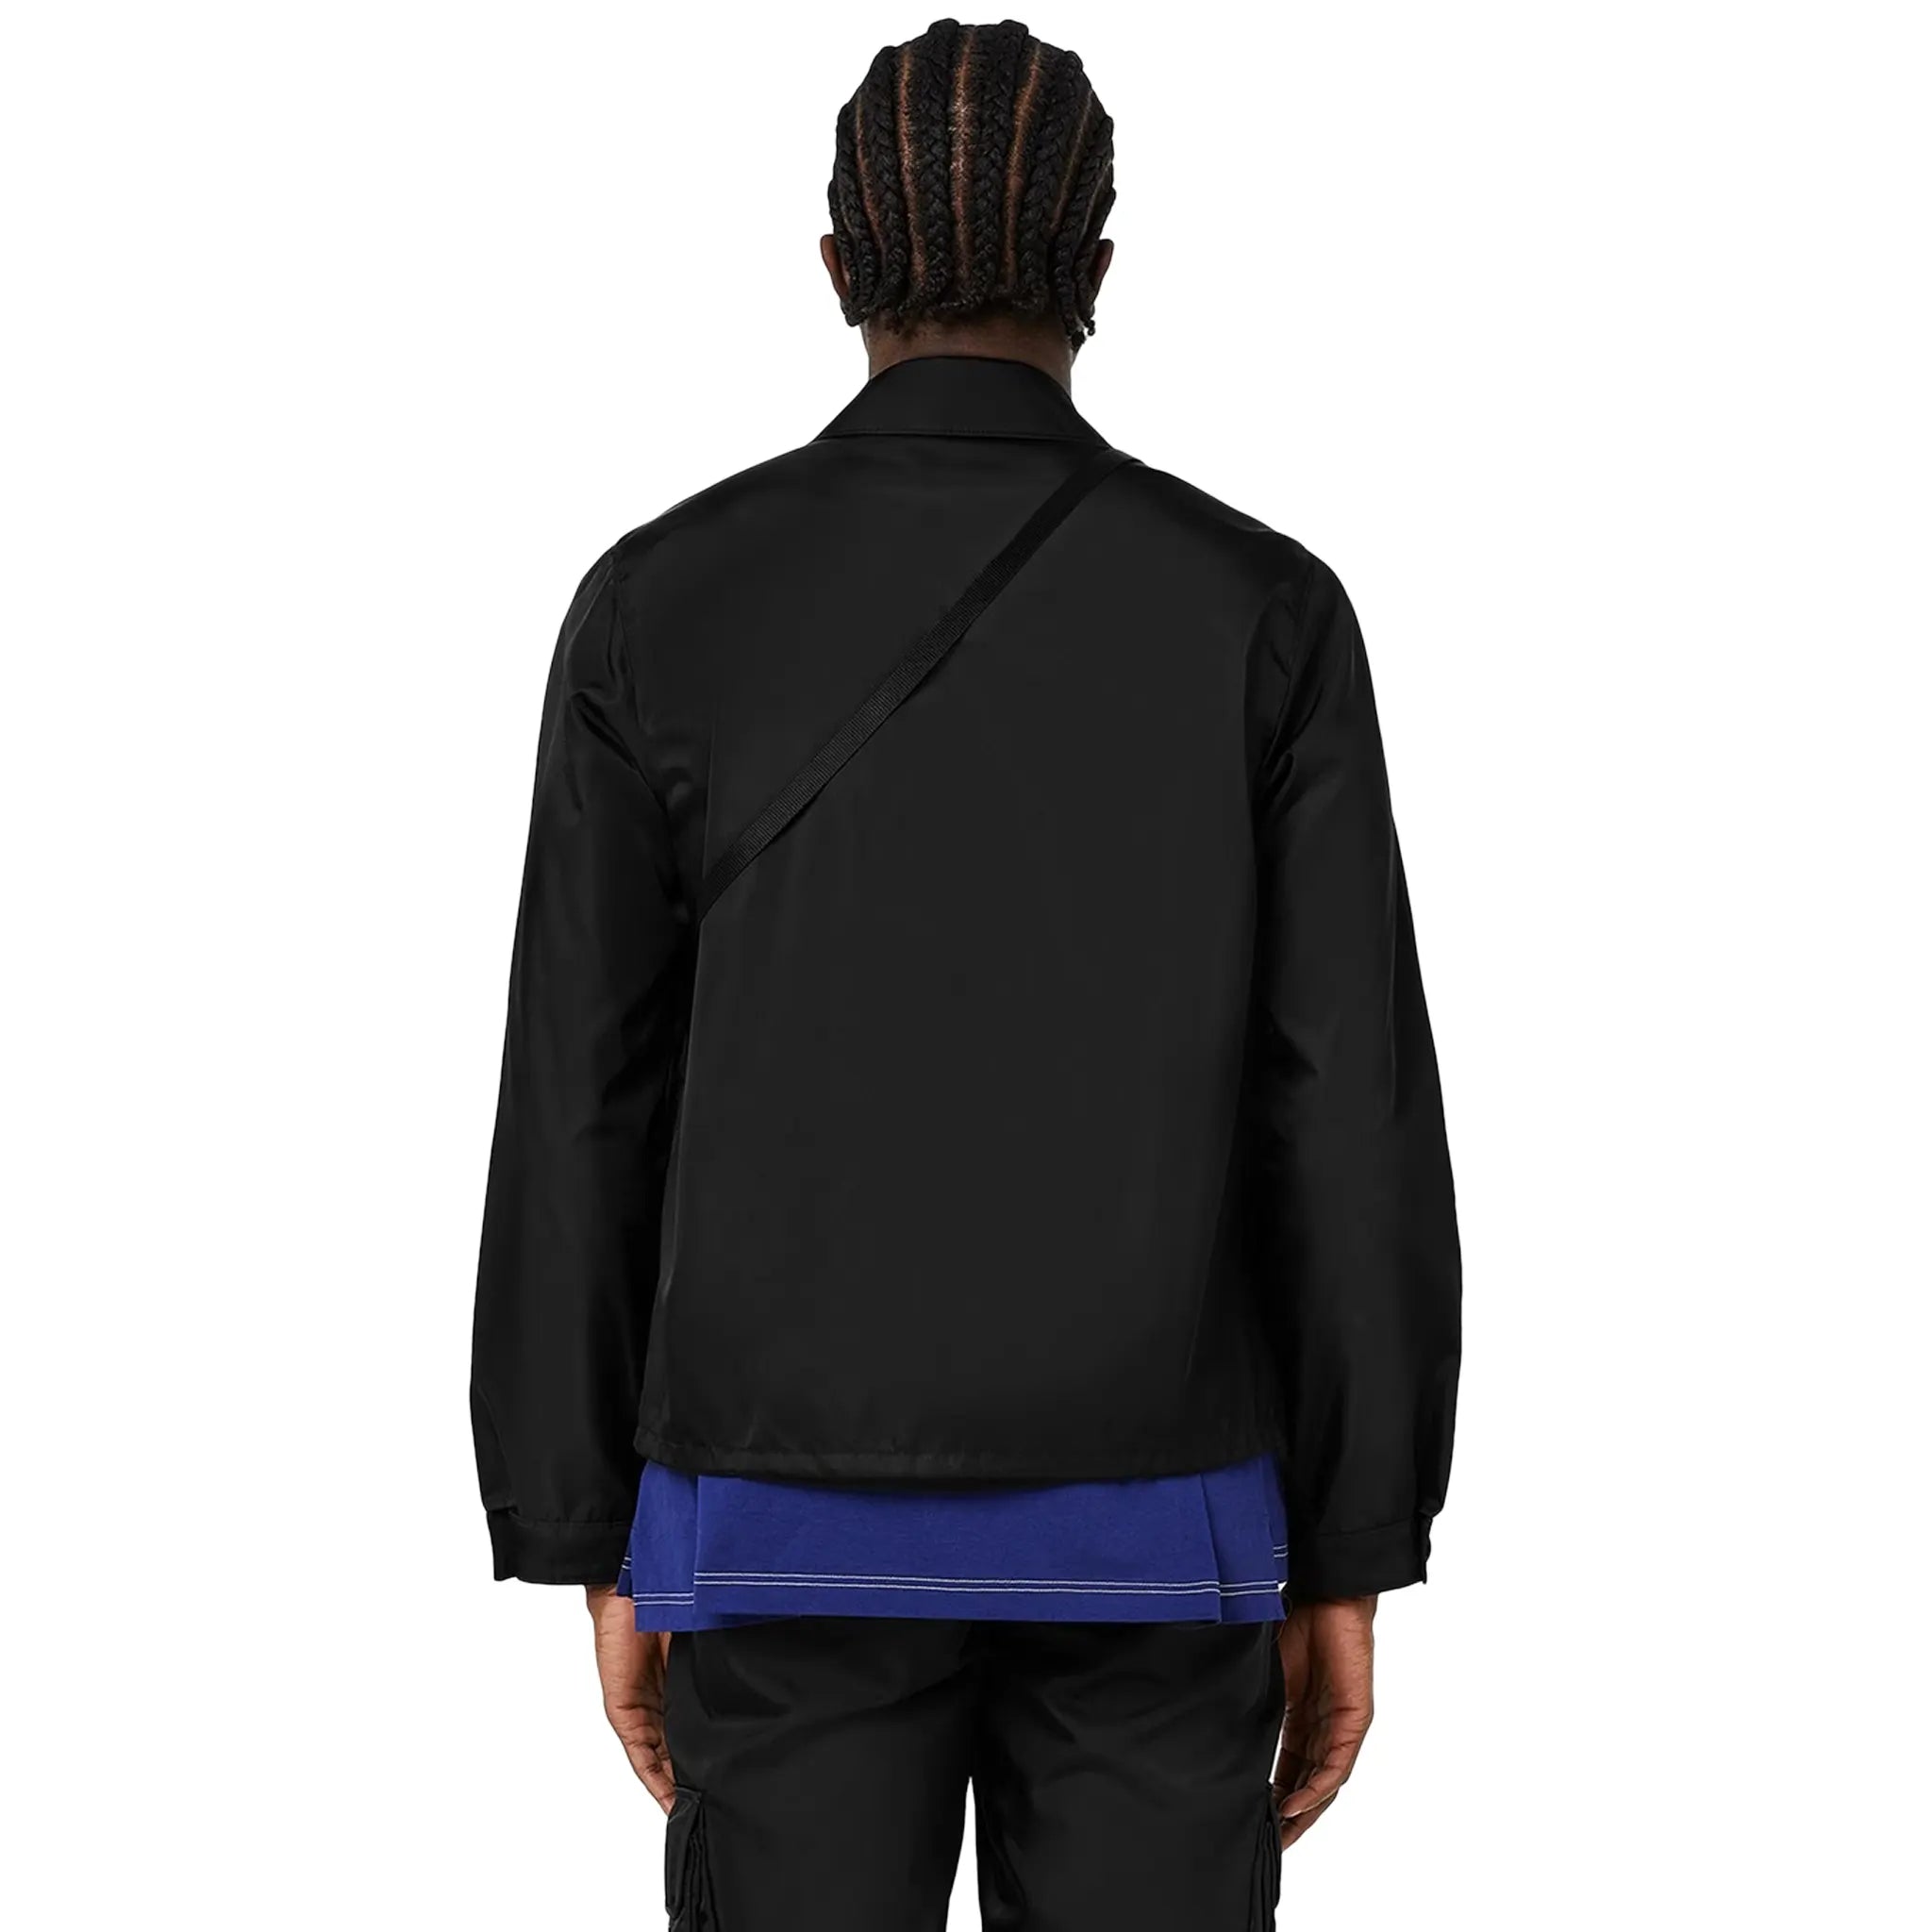 Back Detail view of Prada Re Nylon Blouson Black Jacket SGB684_1WQ8_F0002_S_211